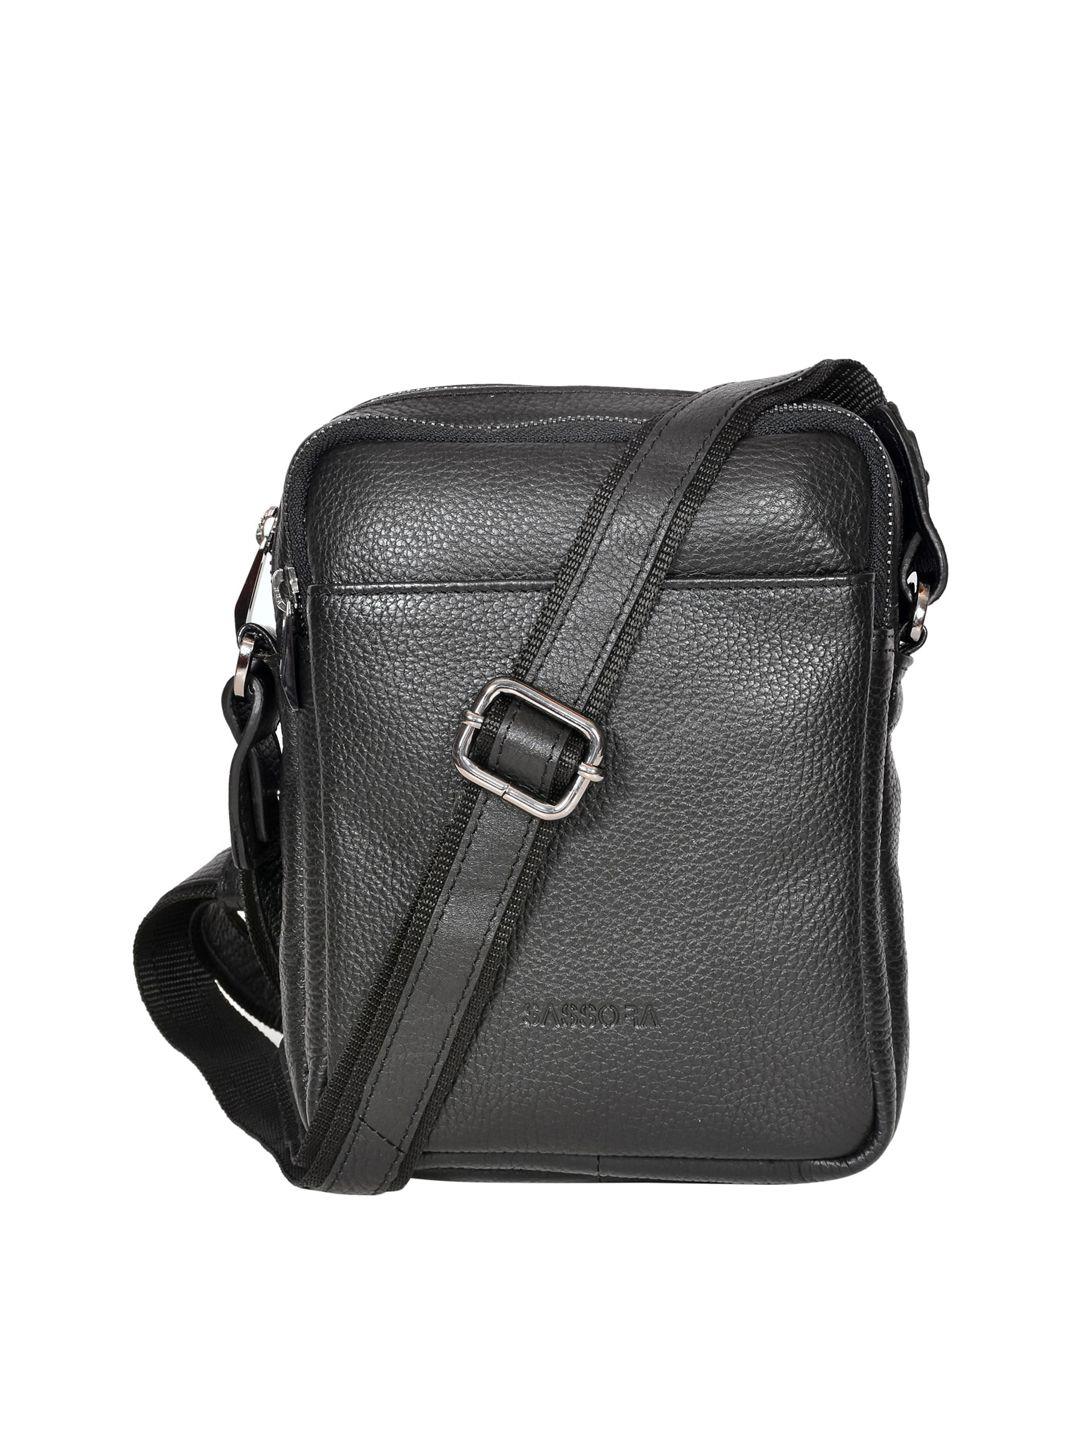 sassora textured leather structured sling bag